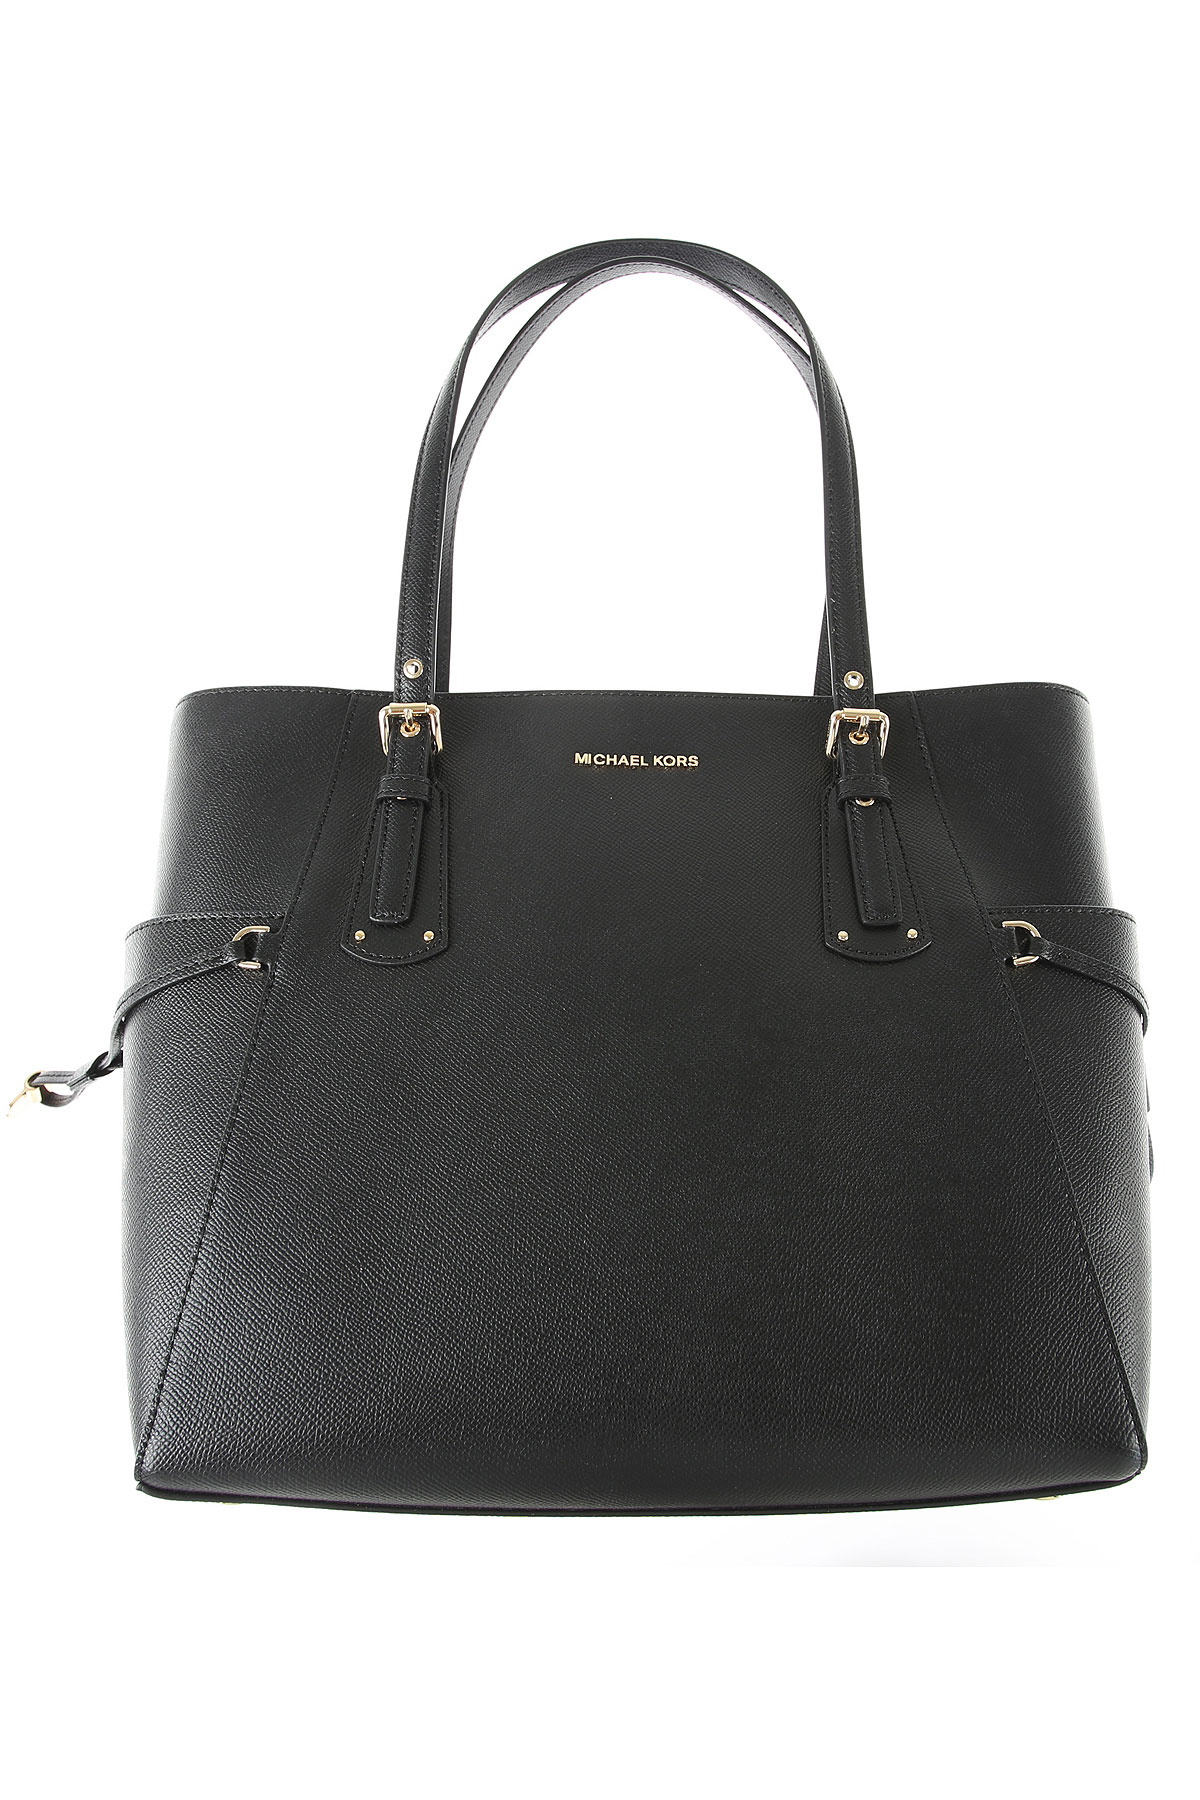 Handbags Michael Kors, Style code: 30h7gv6t9l-001-